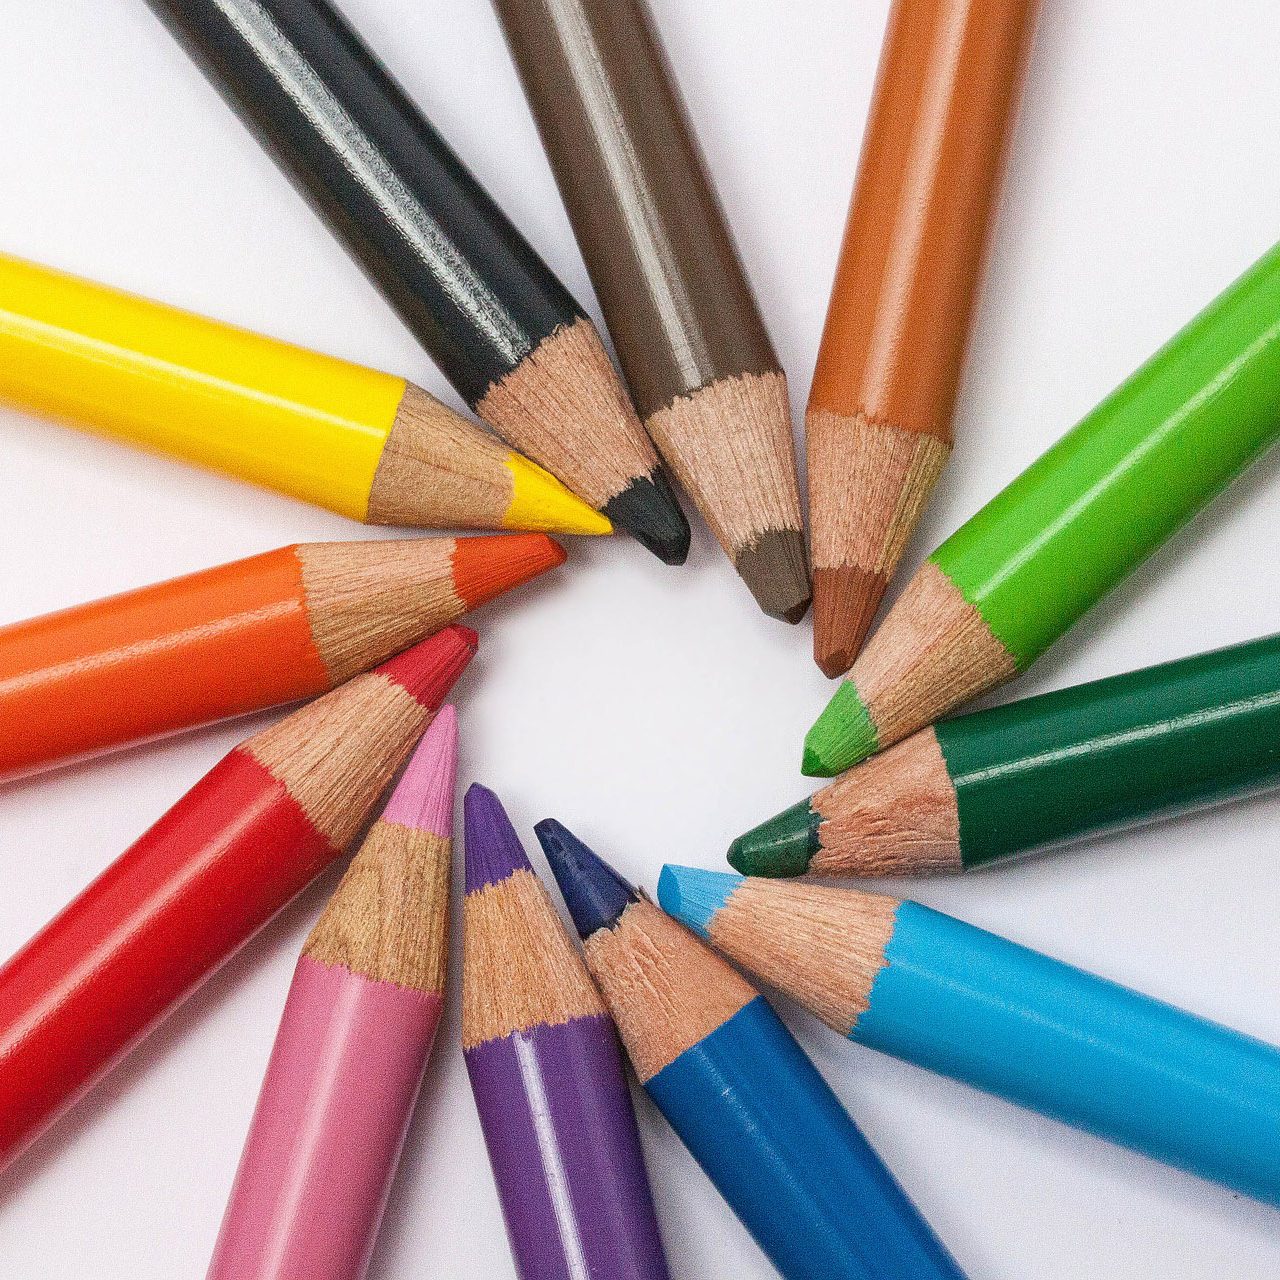 colored-pencils-374771_1920